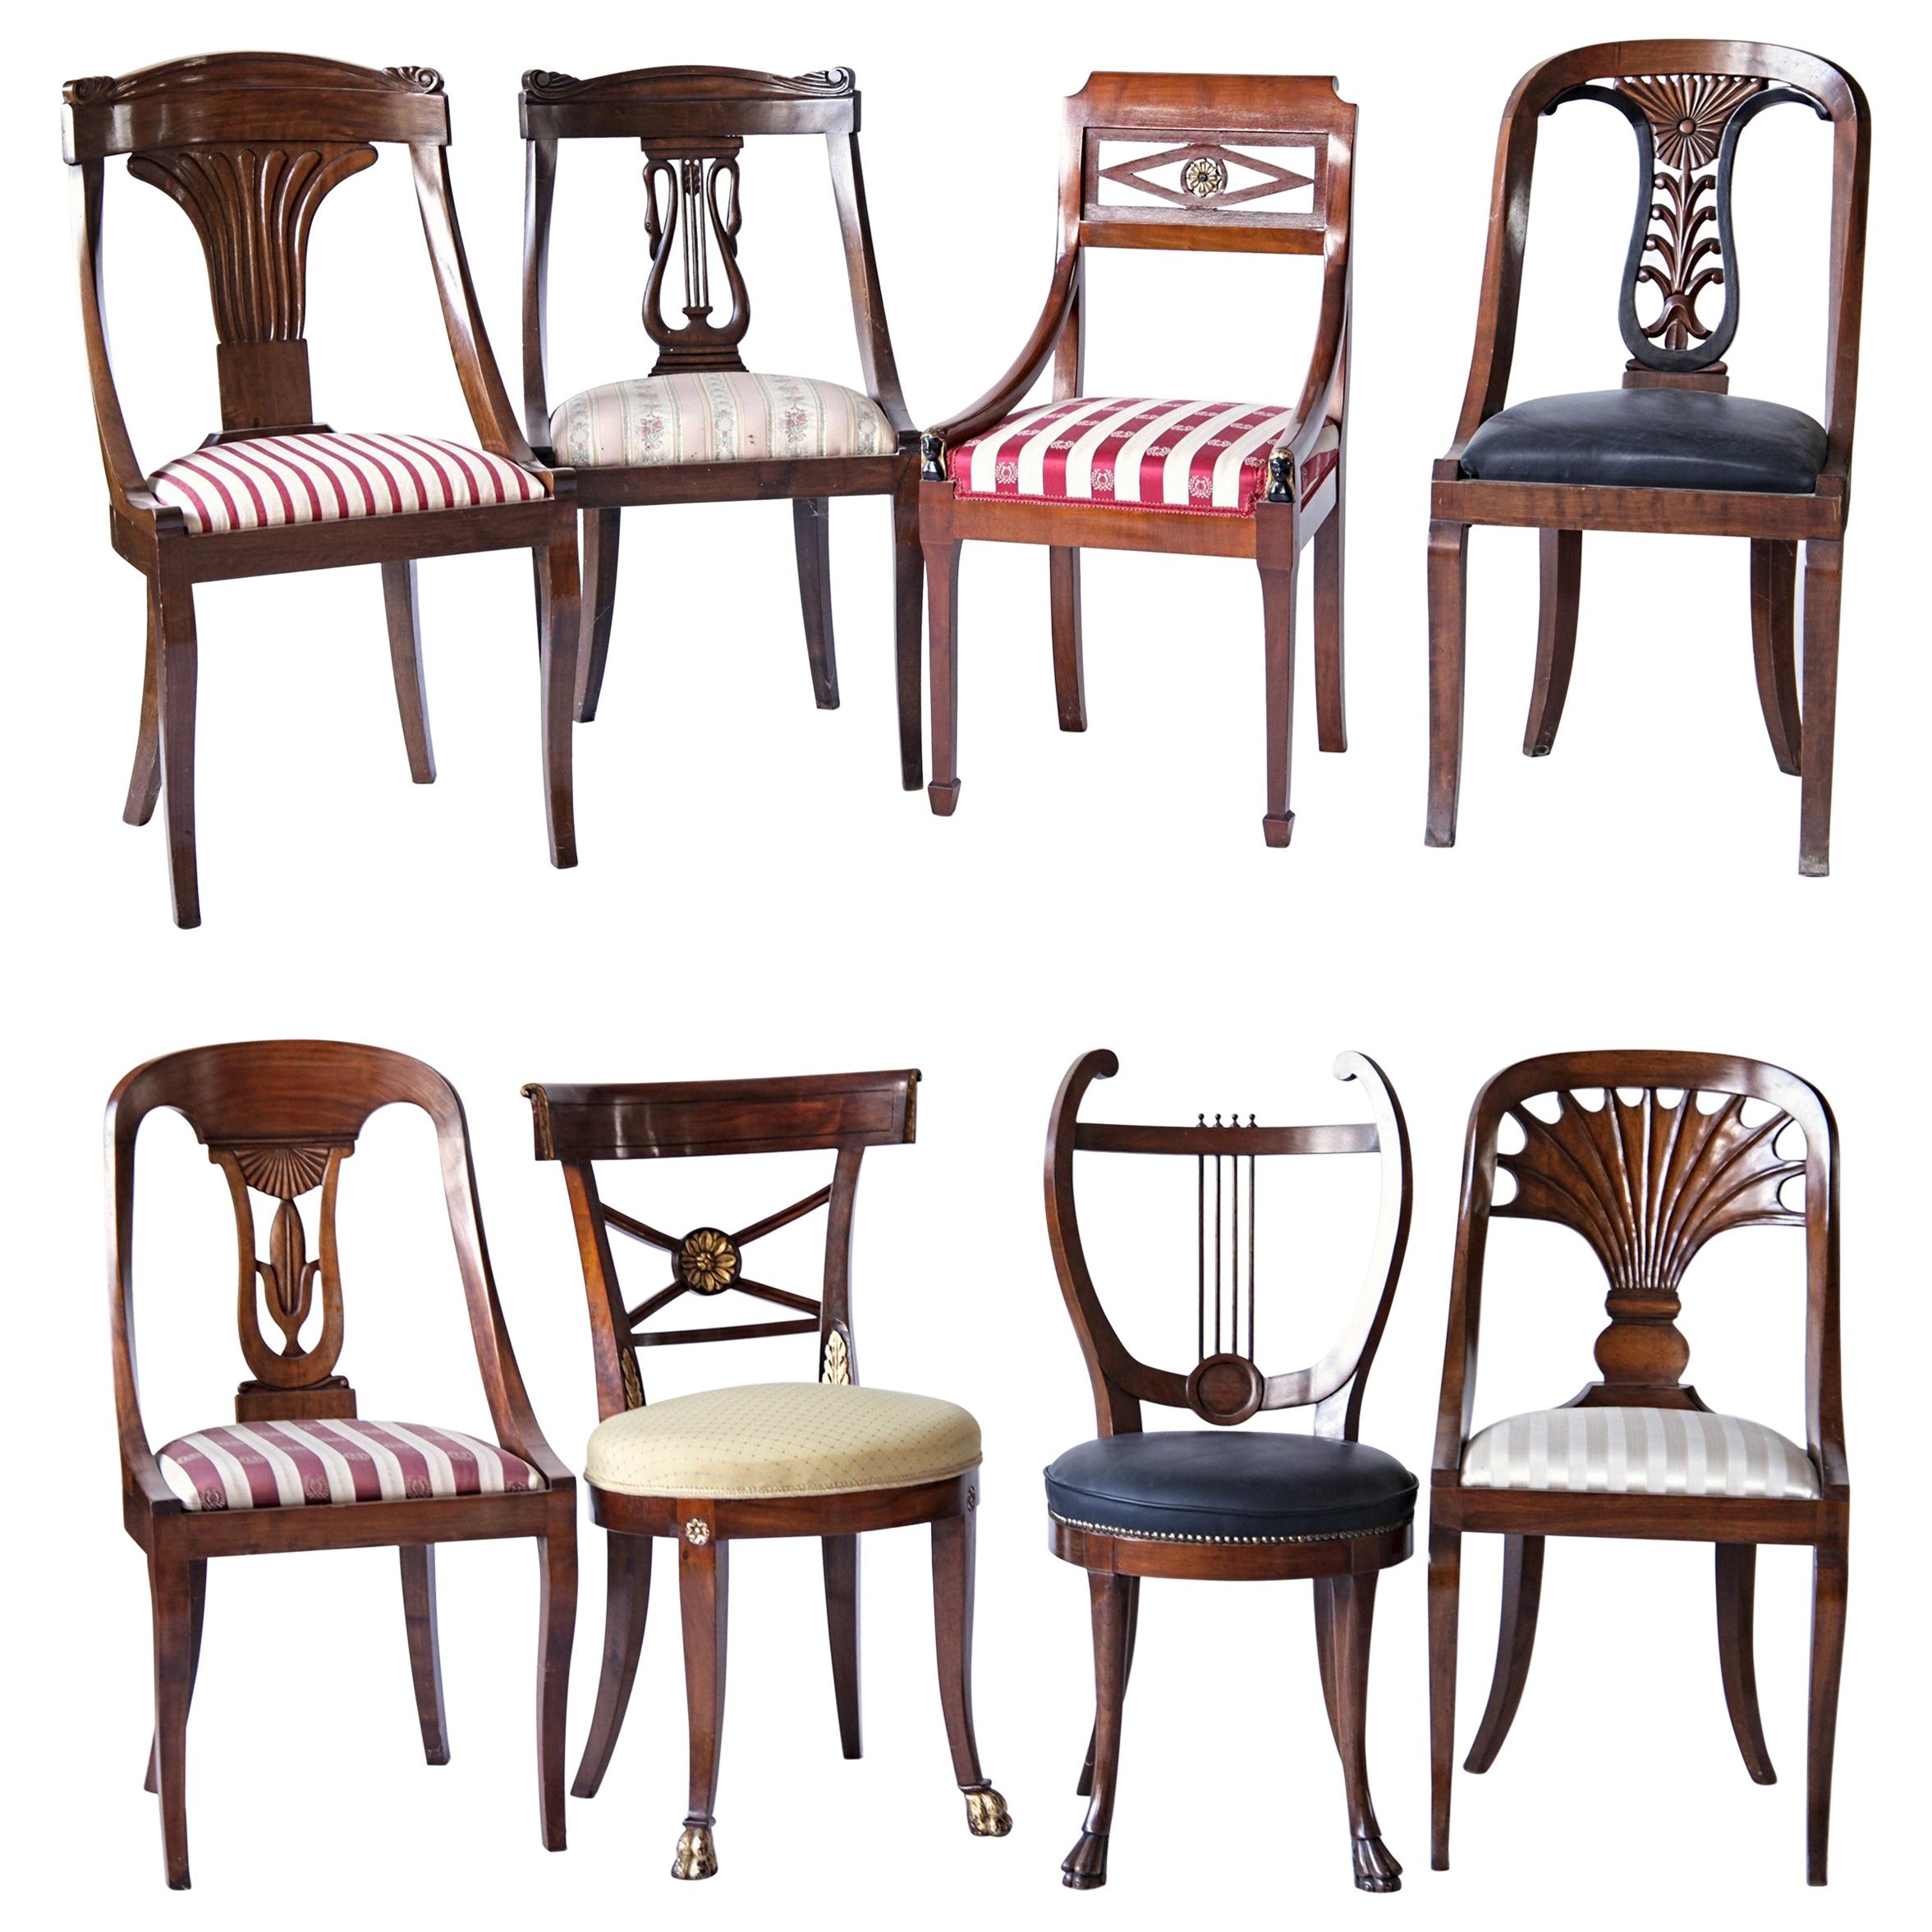 Empire Biedermeier Unique Eclectic Set, 8 Dining Chairs Each in Different Design